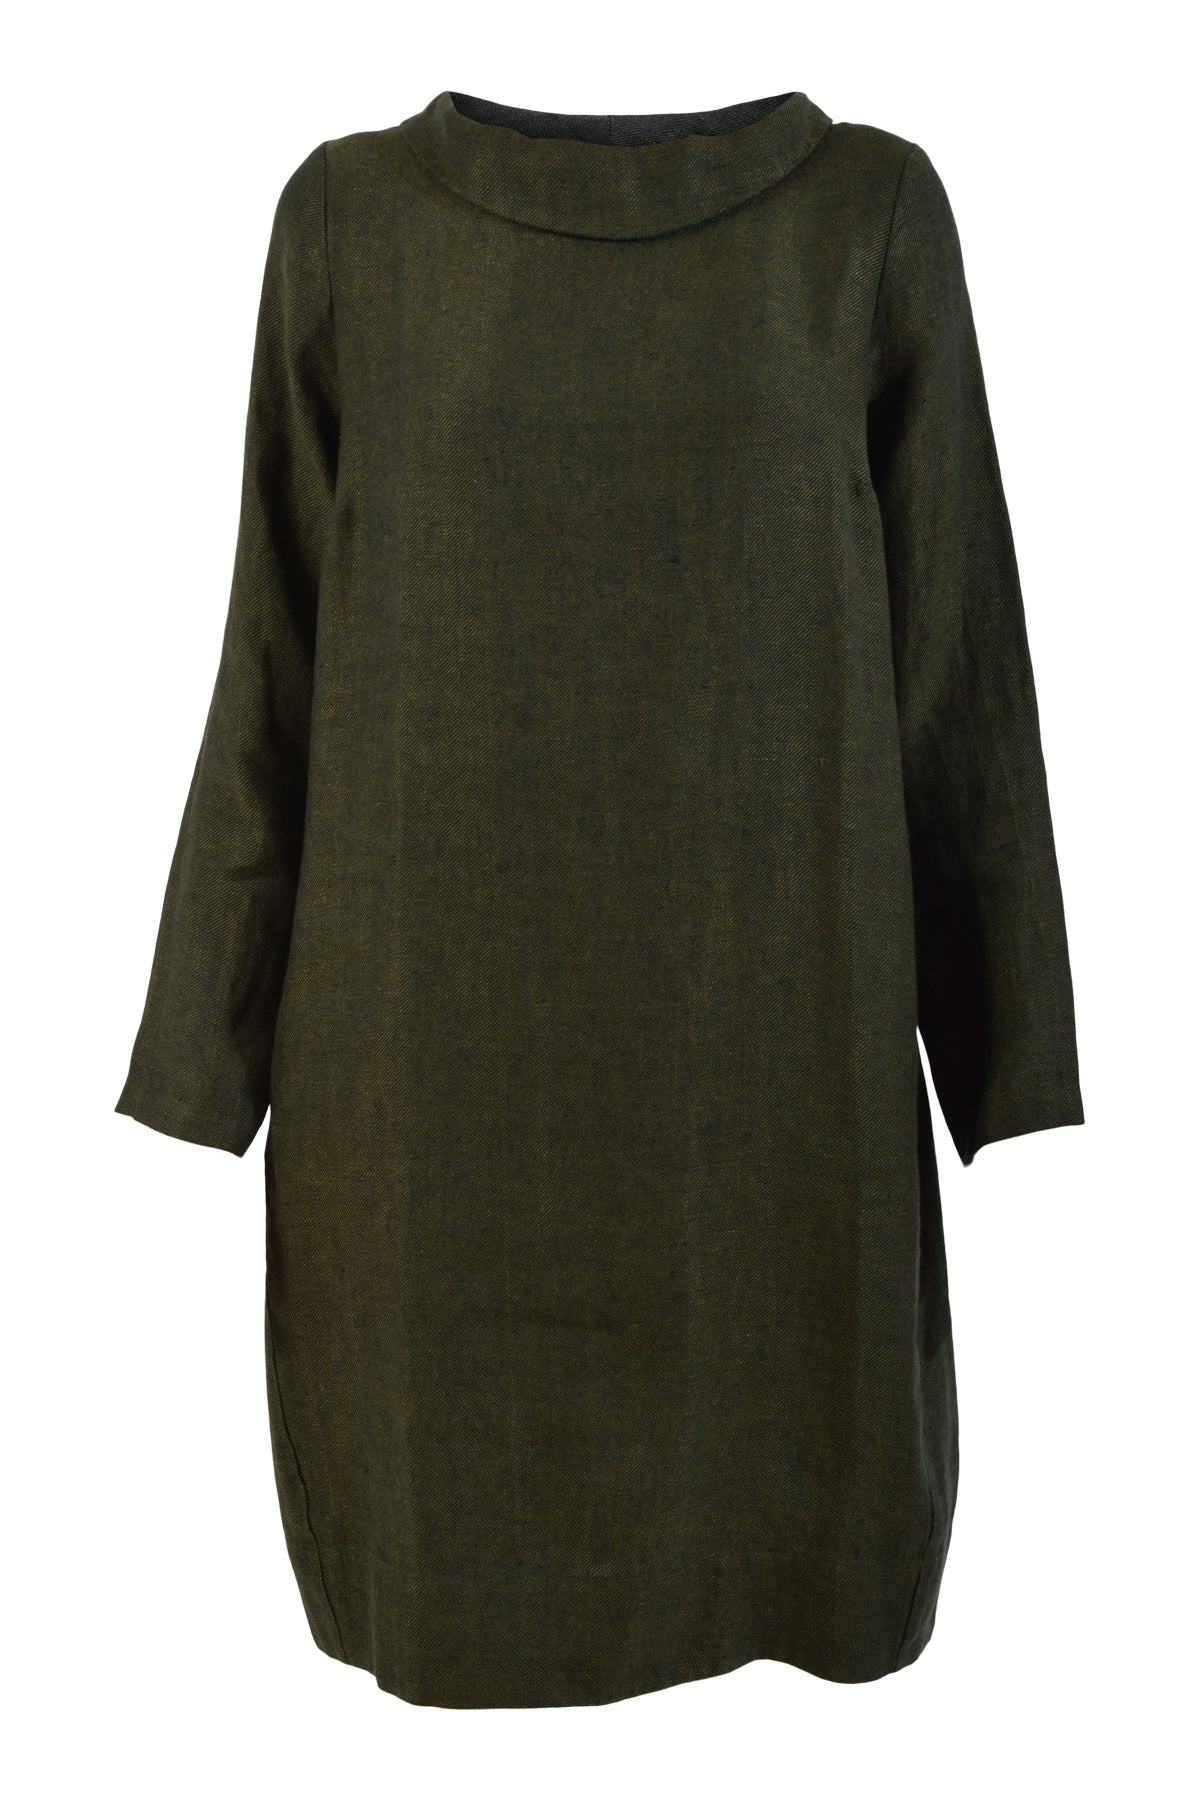 GR Nature Aviete-1 dress, Khaki